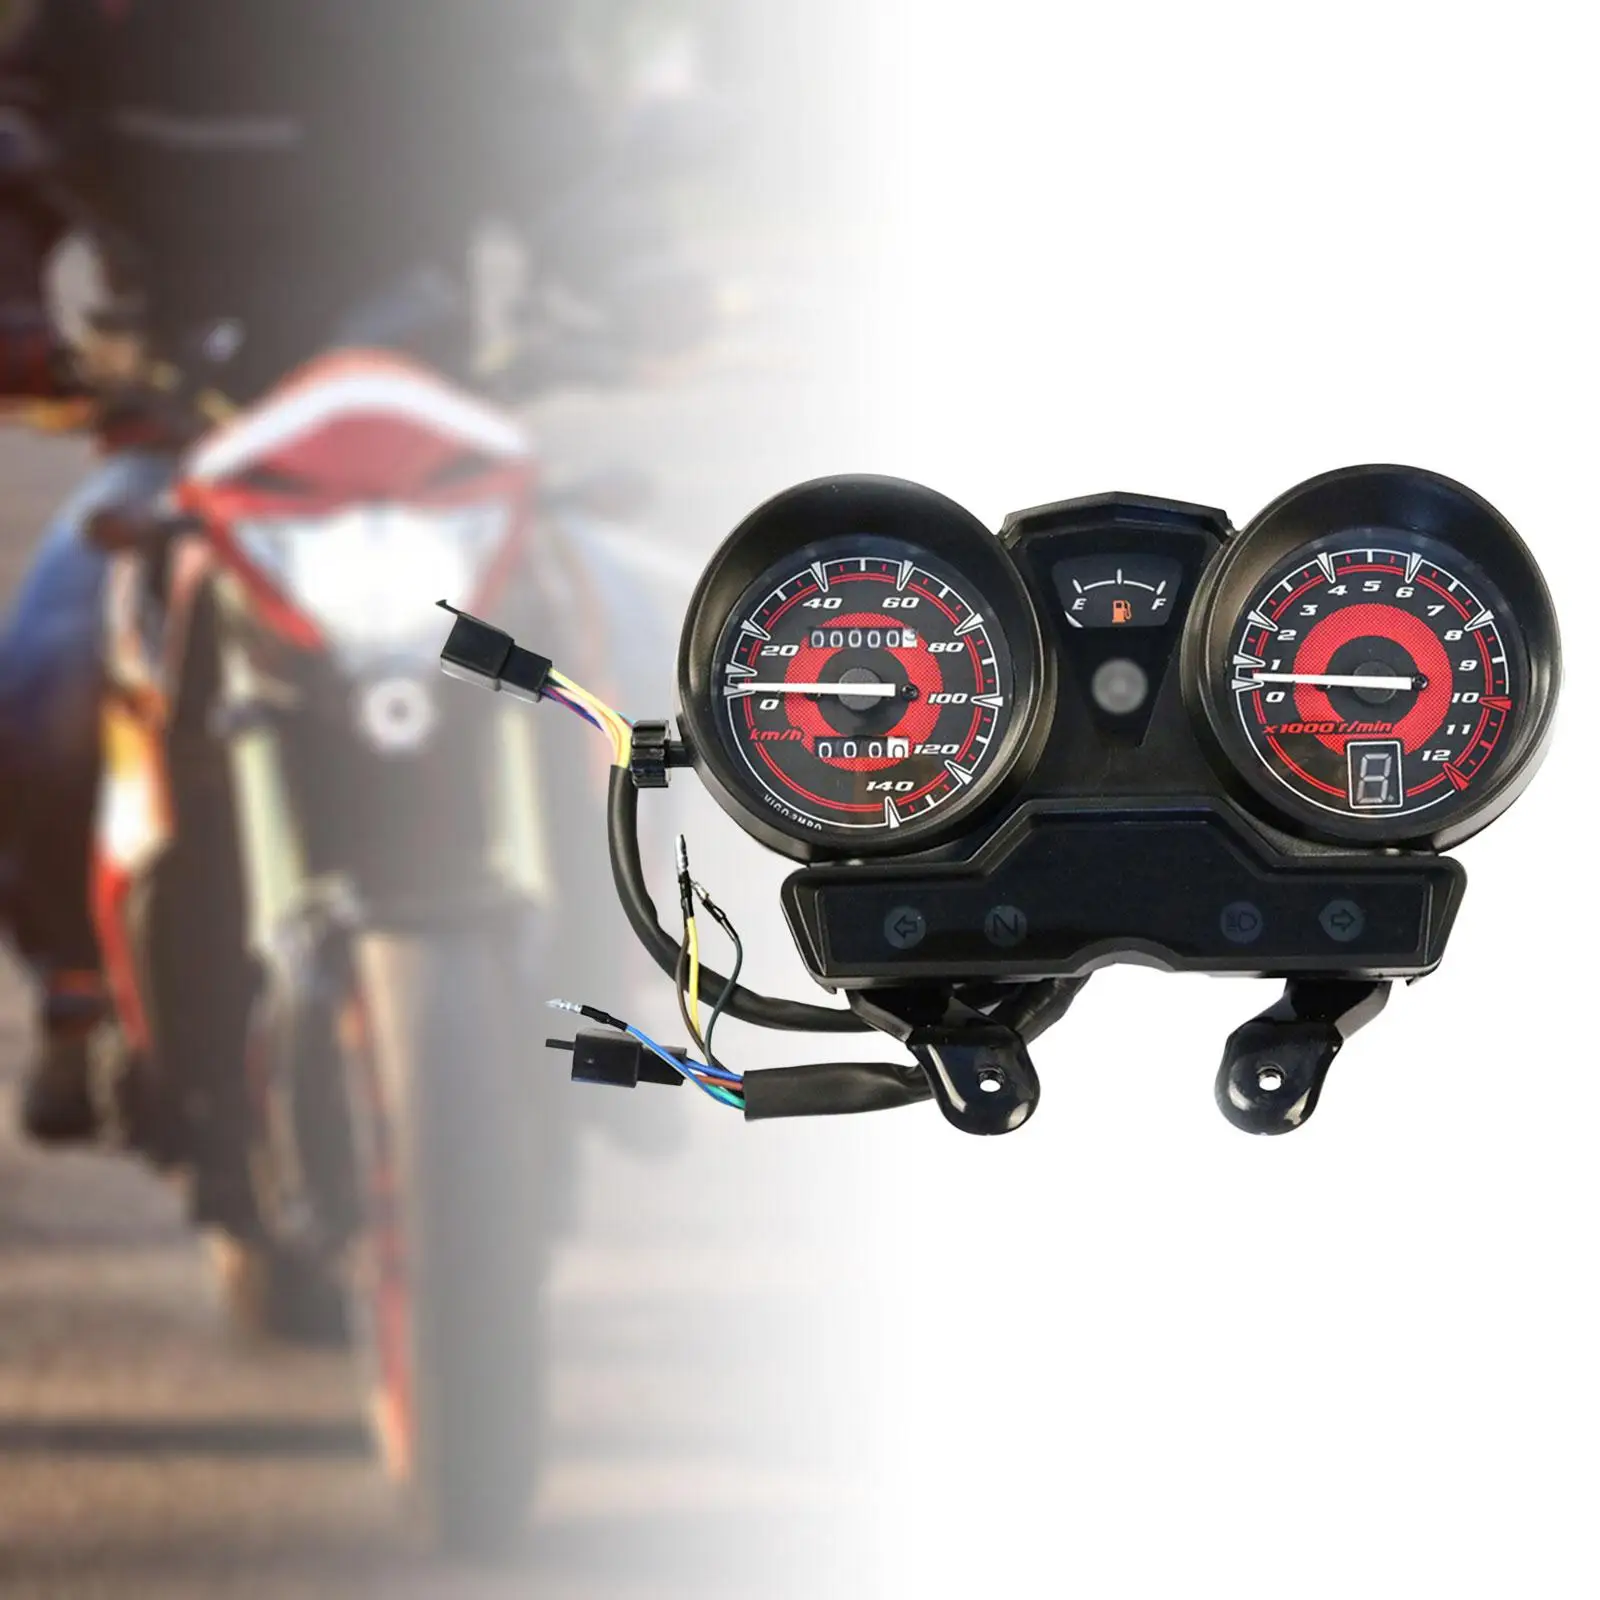 LED Digital Speedometer Speed Gauge Modification for Yamaha Ybr125 Jym125 Accessories